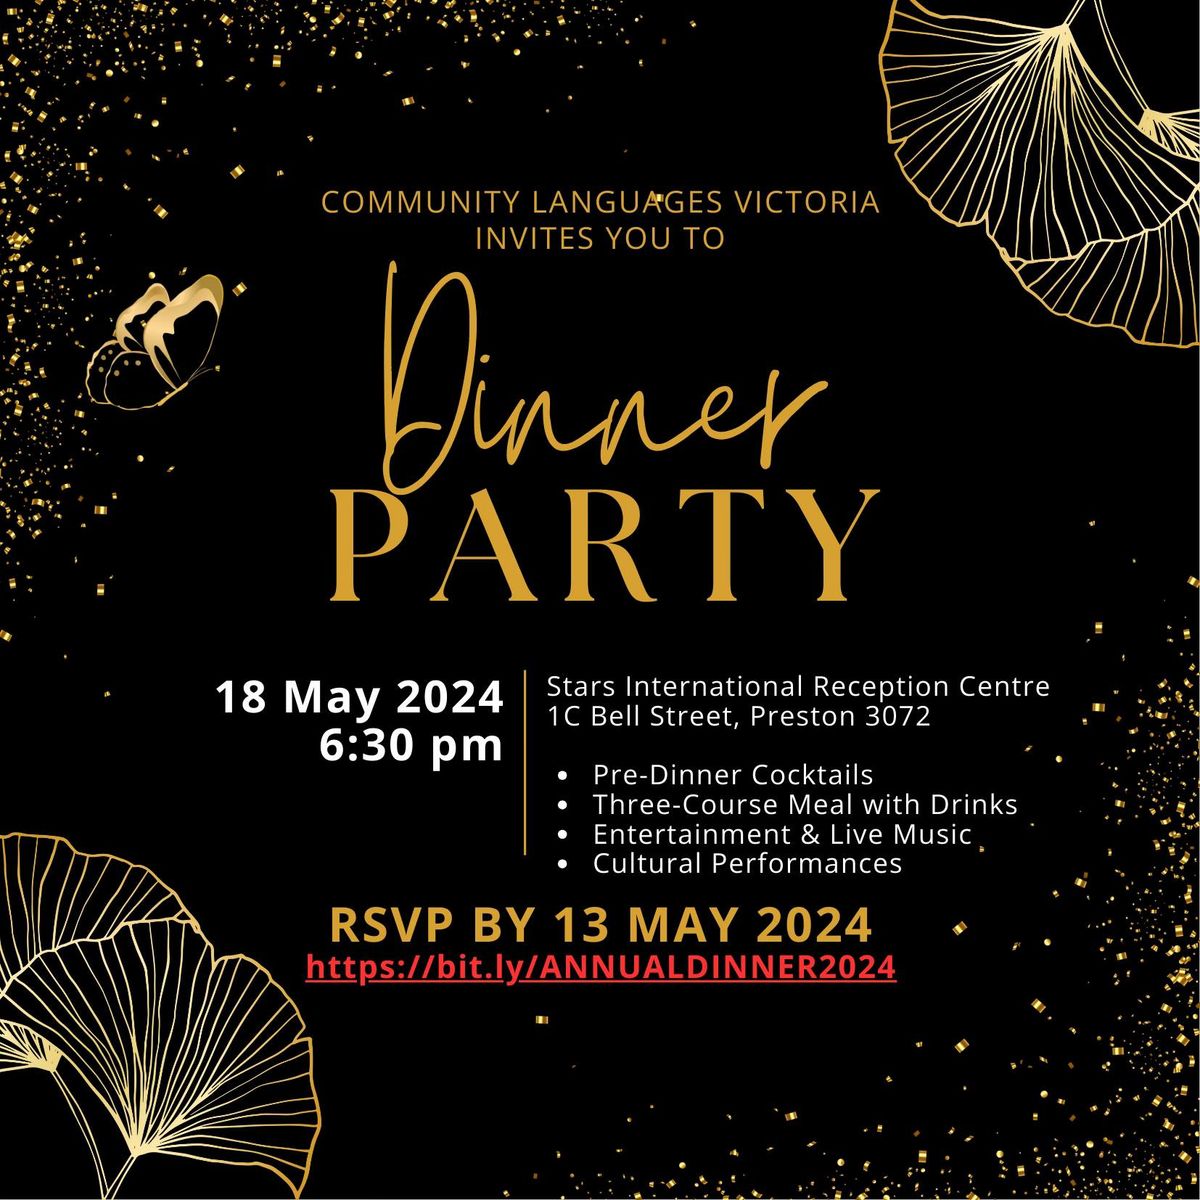 Community Language Victoria's 2024 Dinner Party